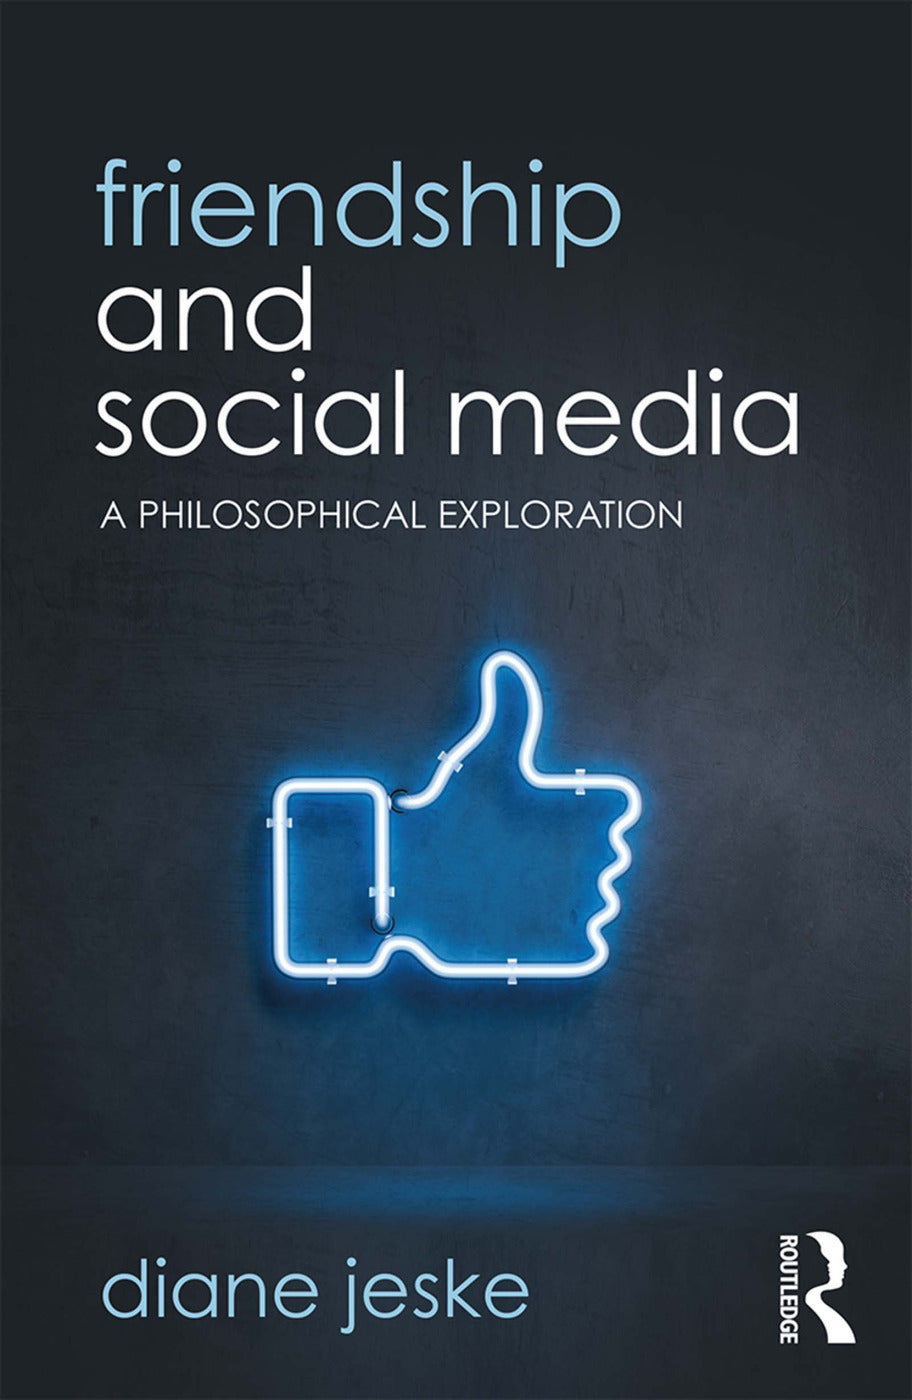 Friendship and Social Media : A Philosophical Exploration ร้านหนังสือและสิ่งของ เป็นร้านหนังสือภาษาอังกฤษหายาก และร้านกาแฟ หรือ บุ๊คคาเฟ่ ตั้งอยู่สุขุมวิท กรุงเทพ